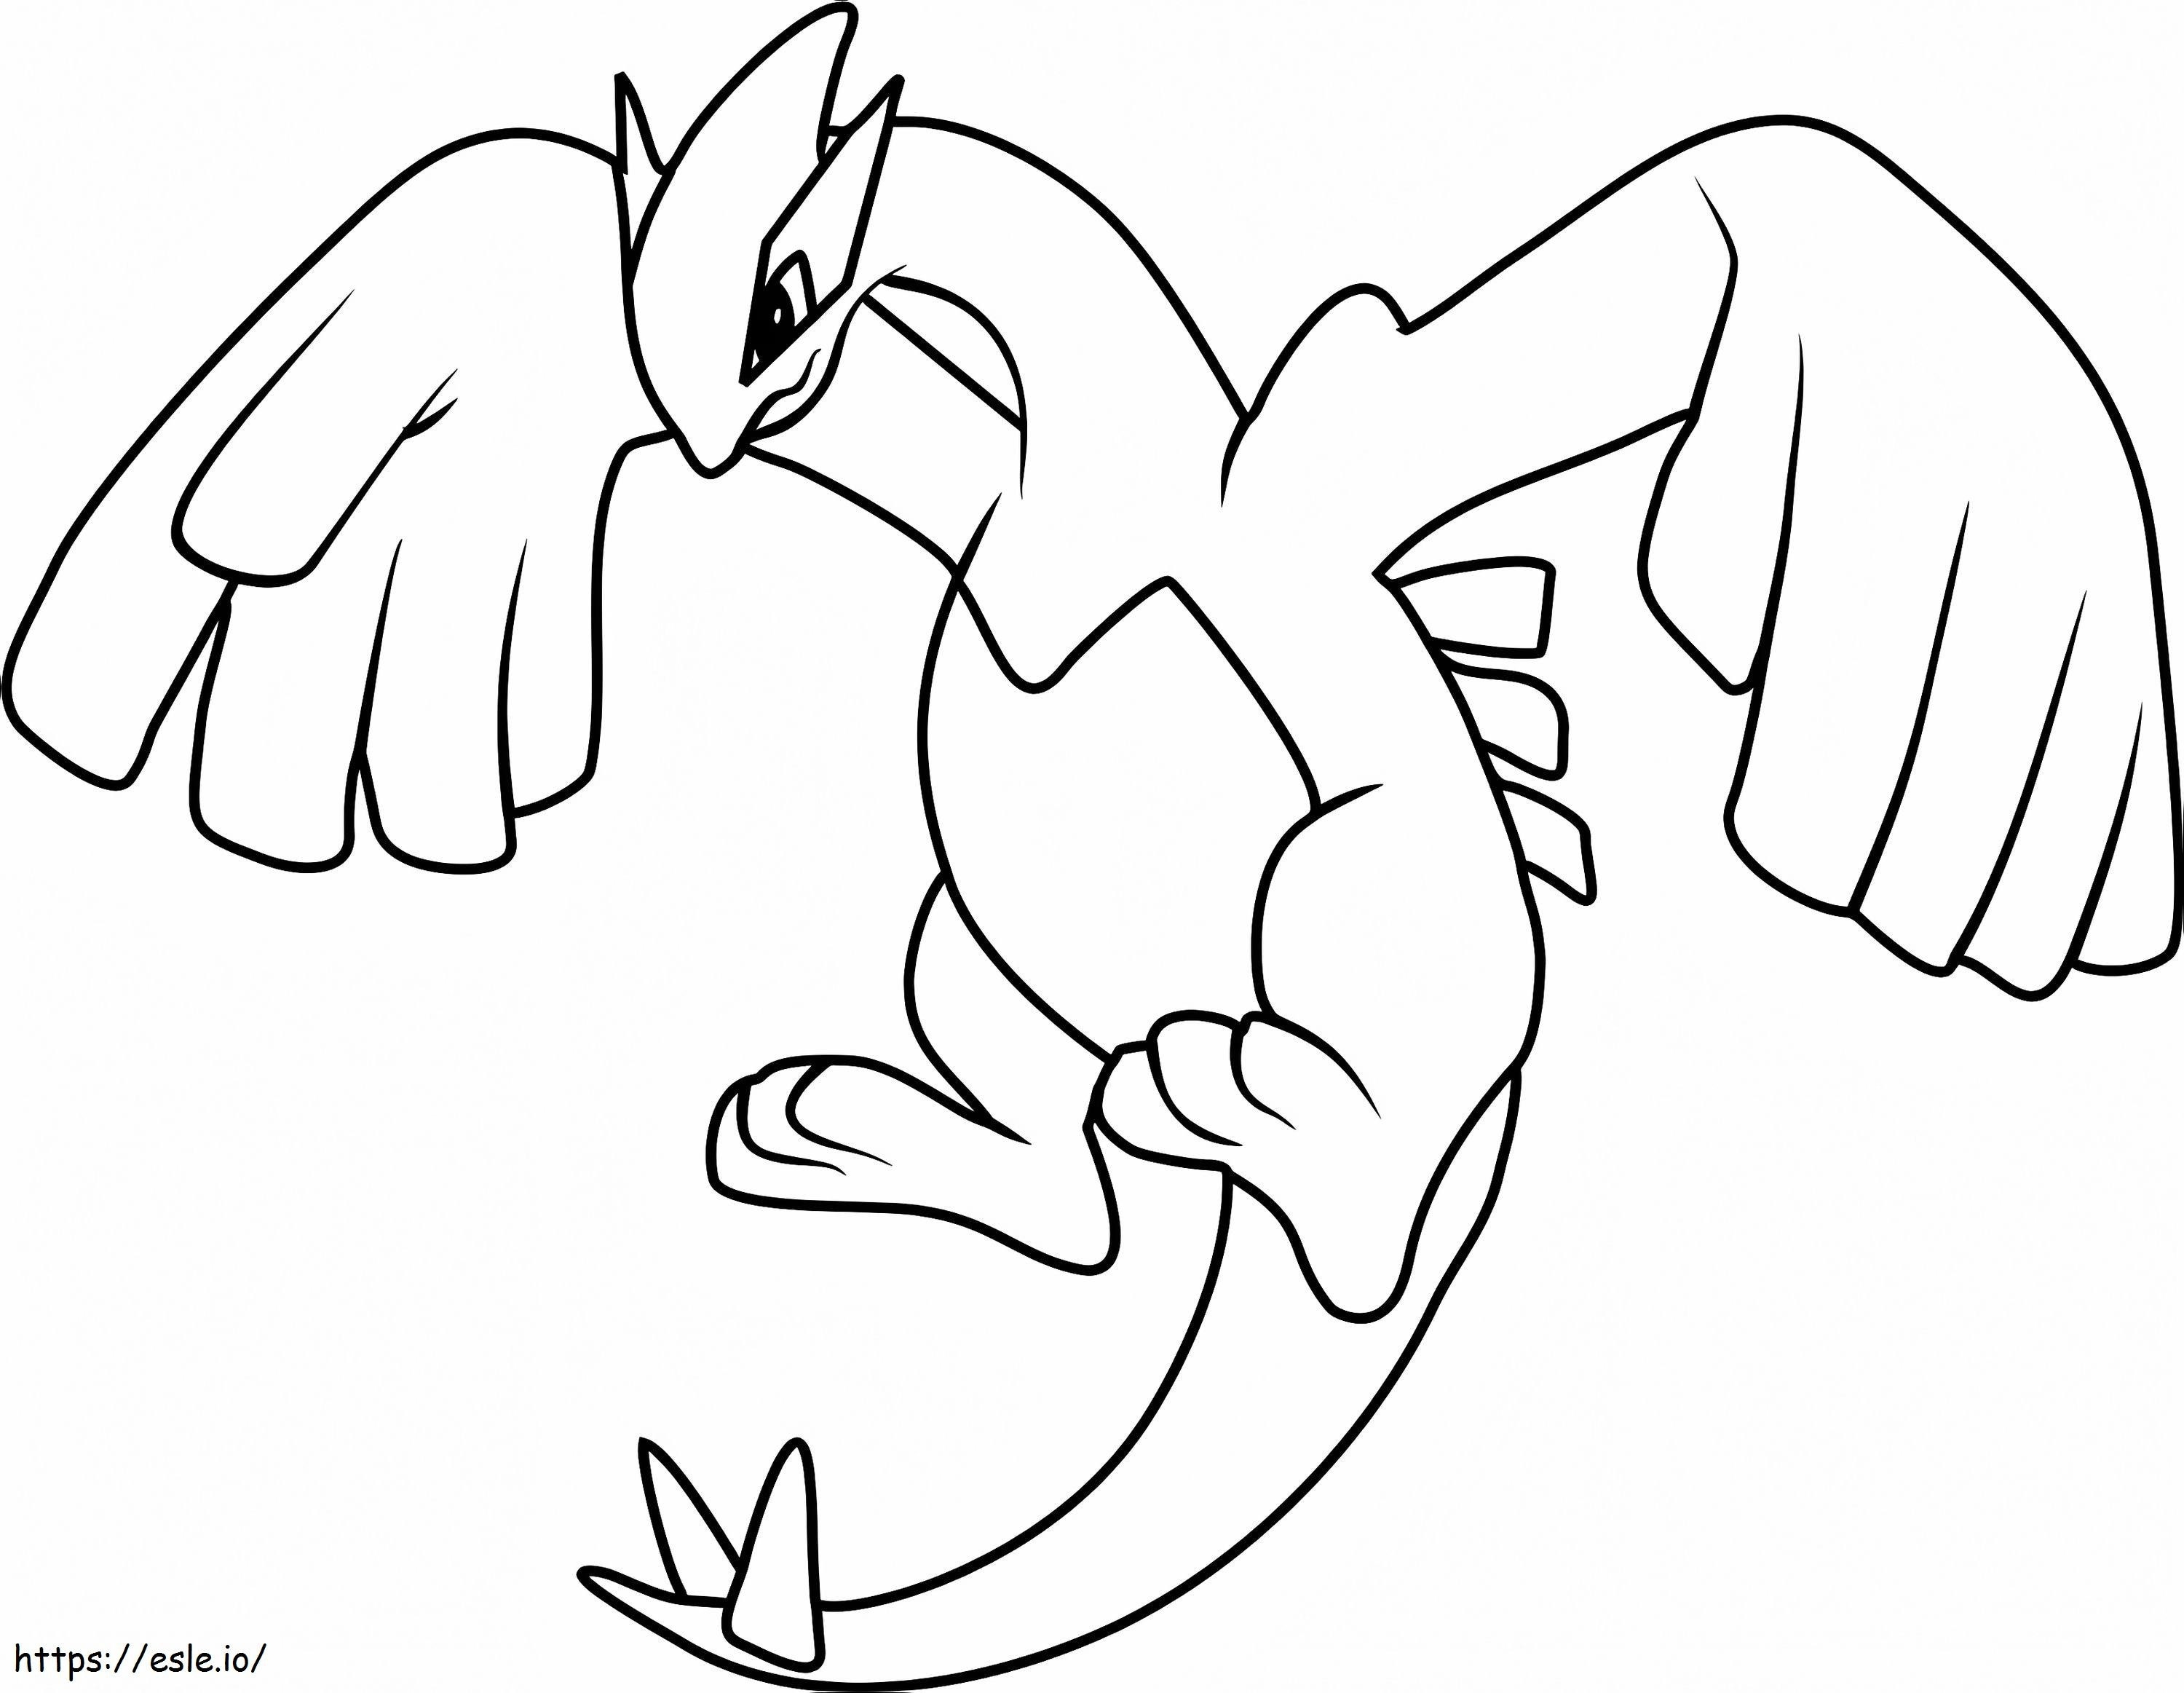 Lugia Pokemon coloring page